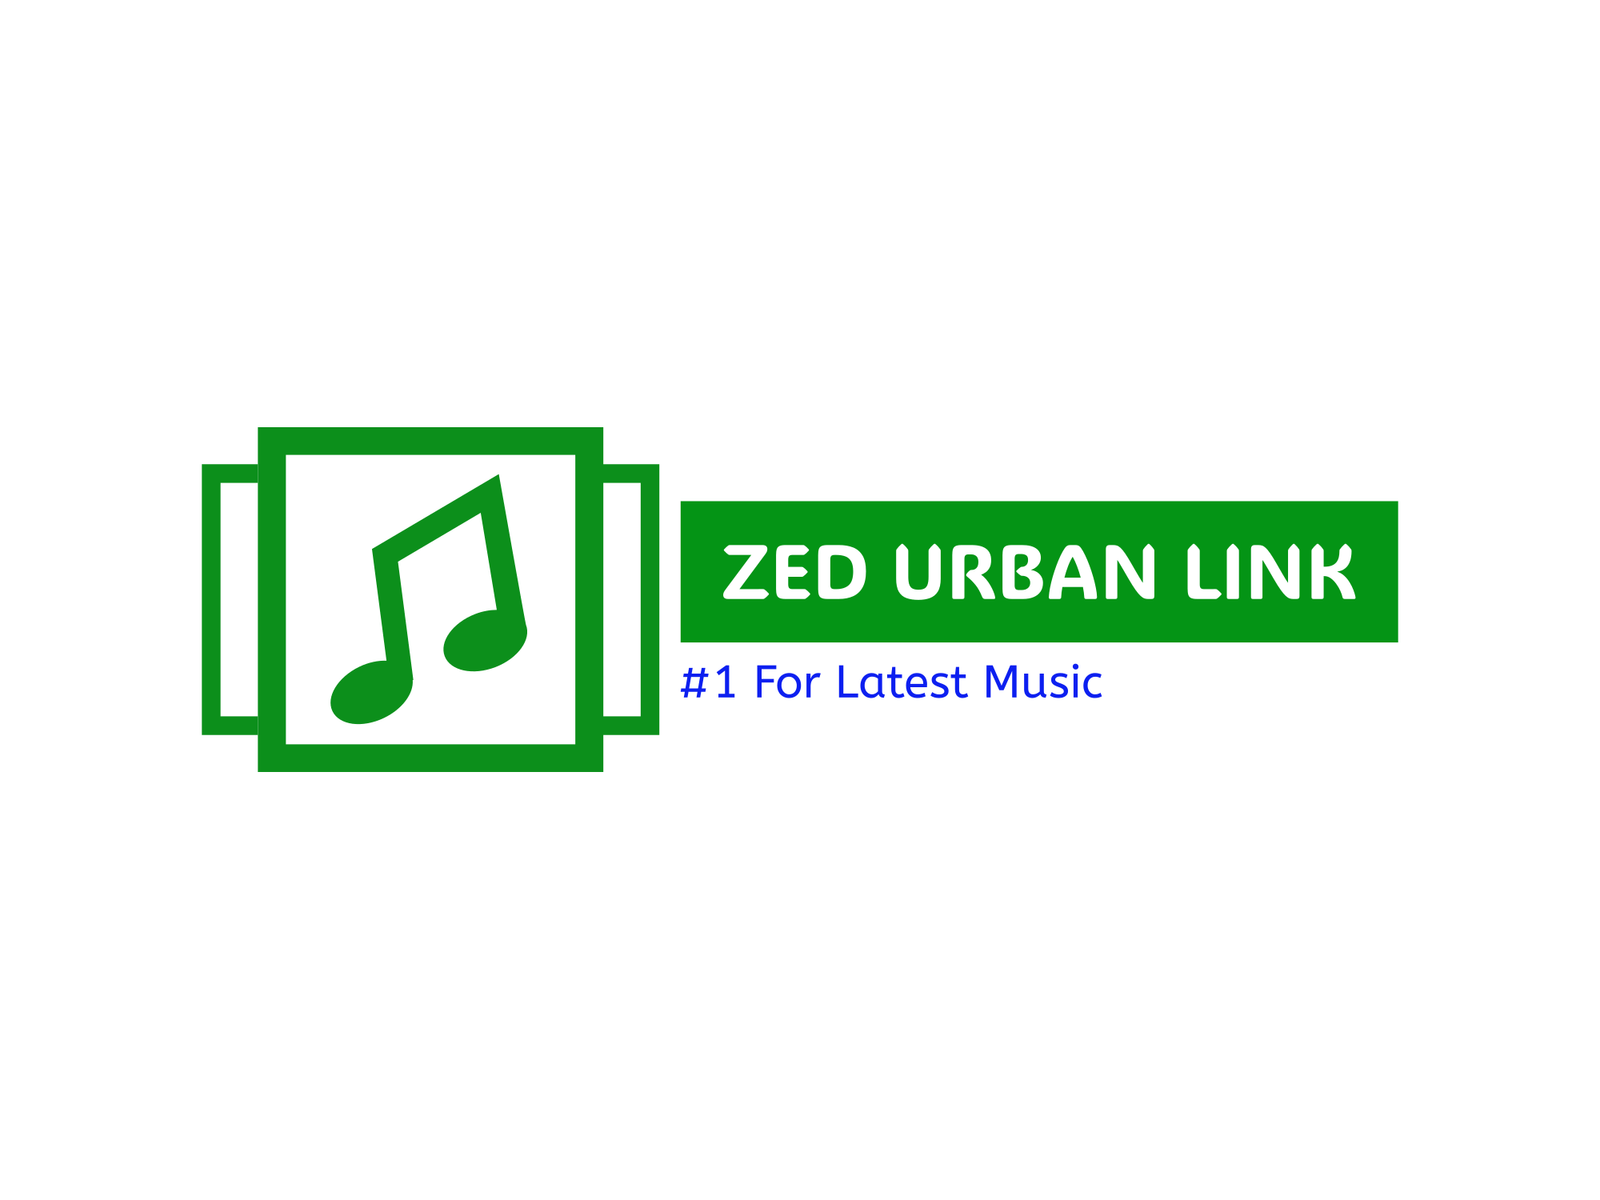 Zed Urban Link